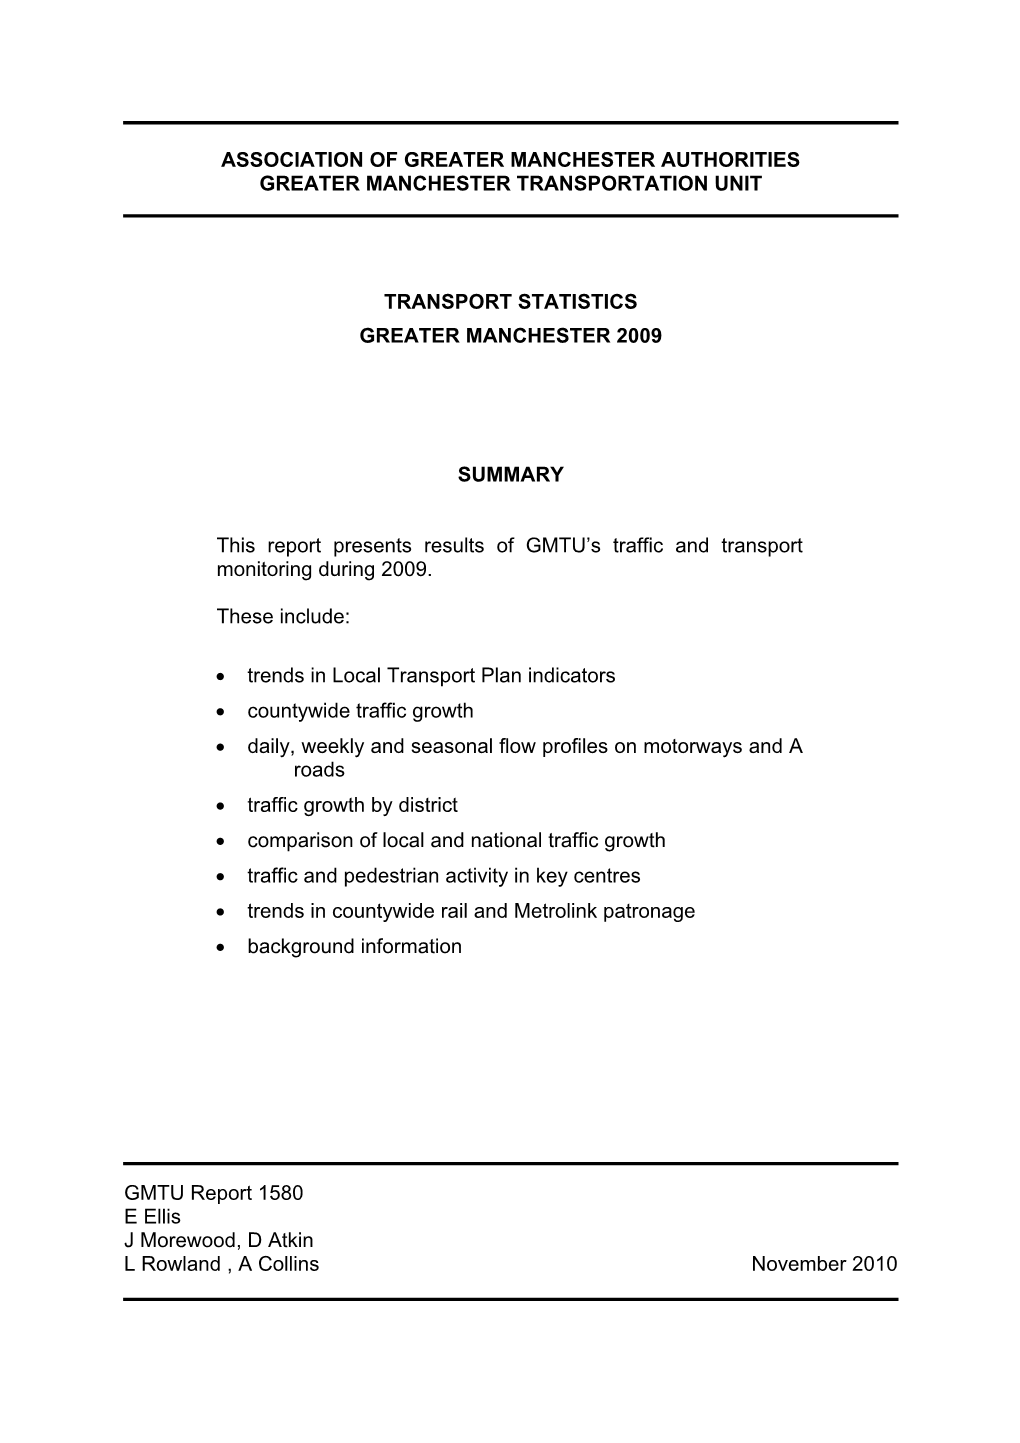 Transport Statistics Greater Manchester 2009 Full Report